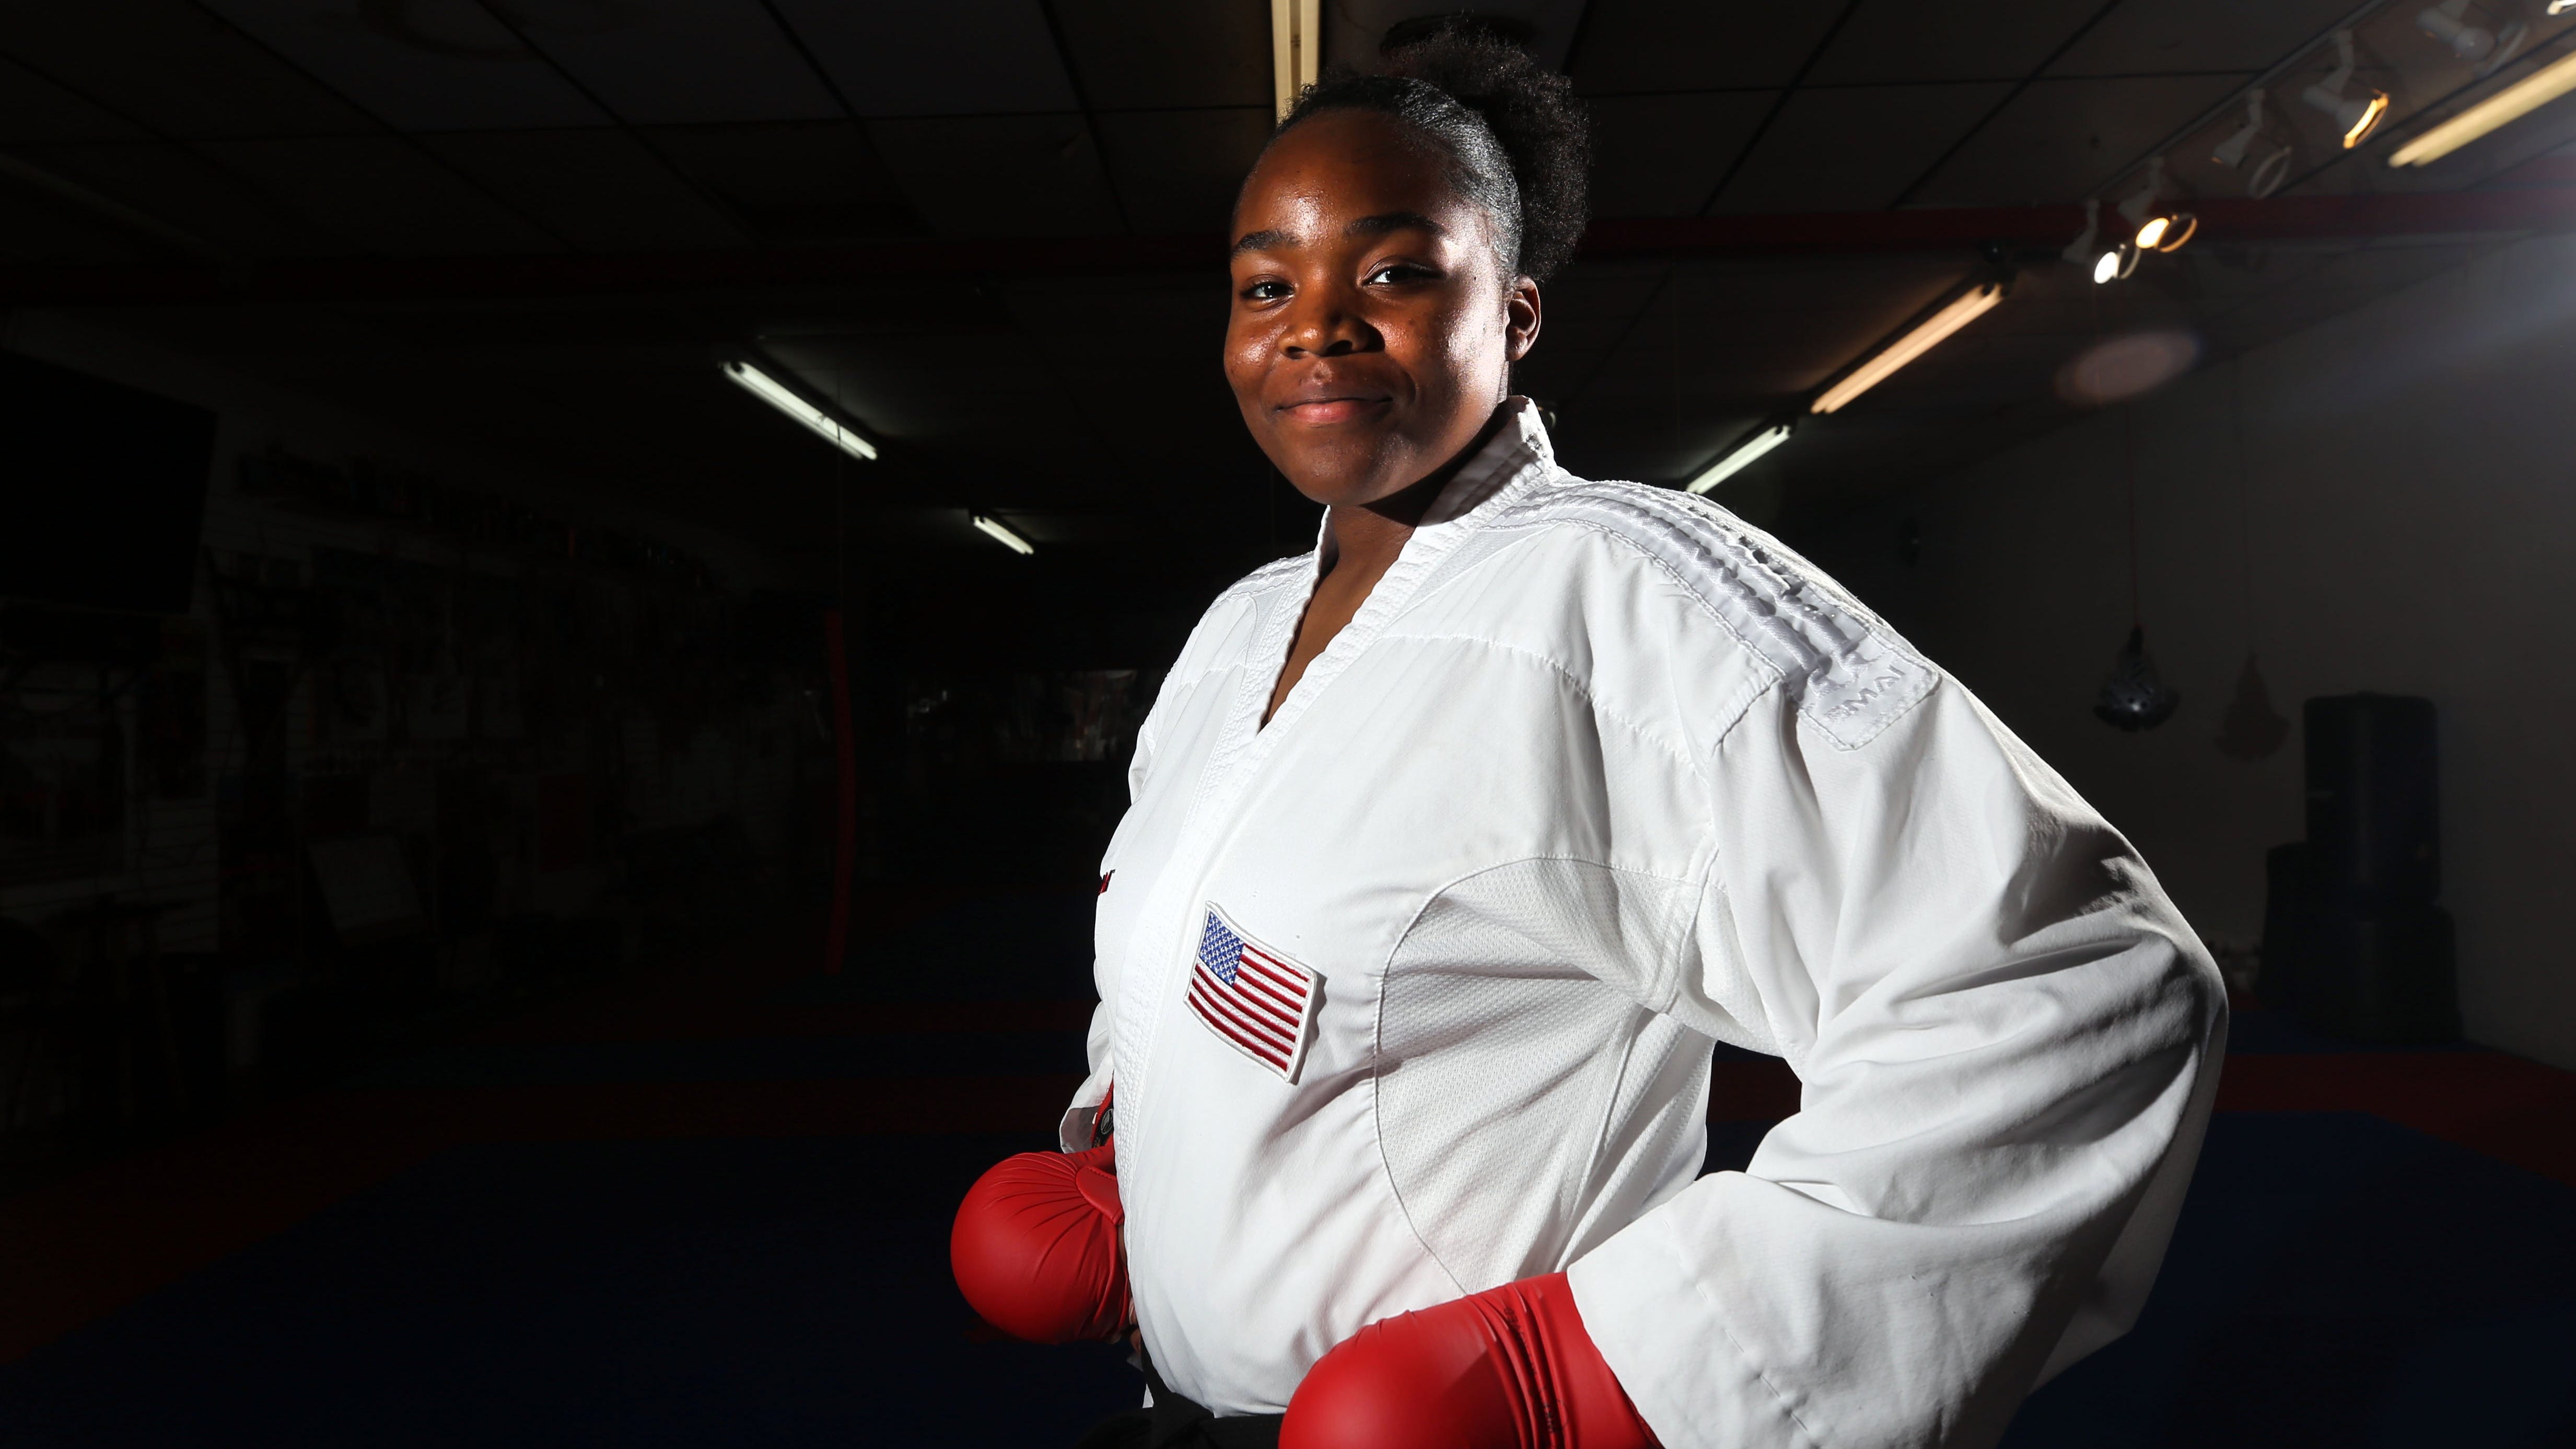 Columbus high school student set for World Karate Championships